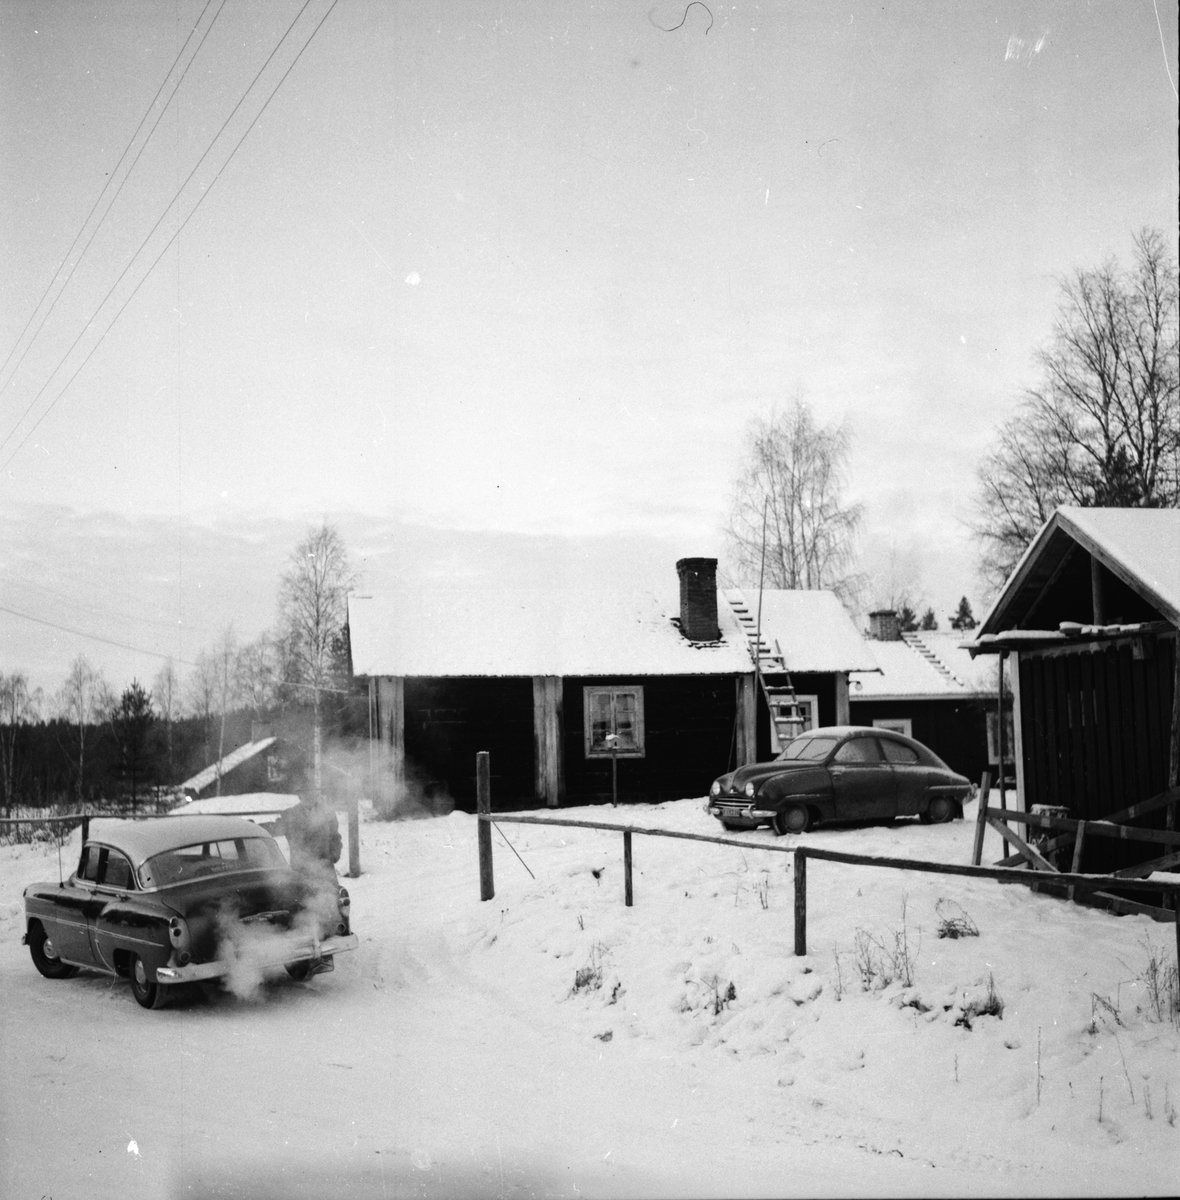 JL Olwén bygge vägar.
Edsbyn december 1956